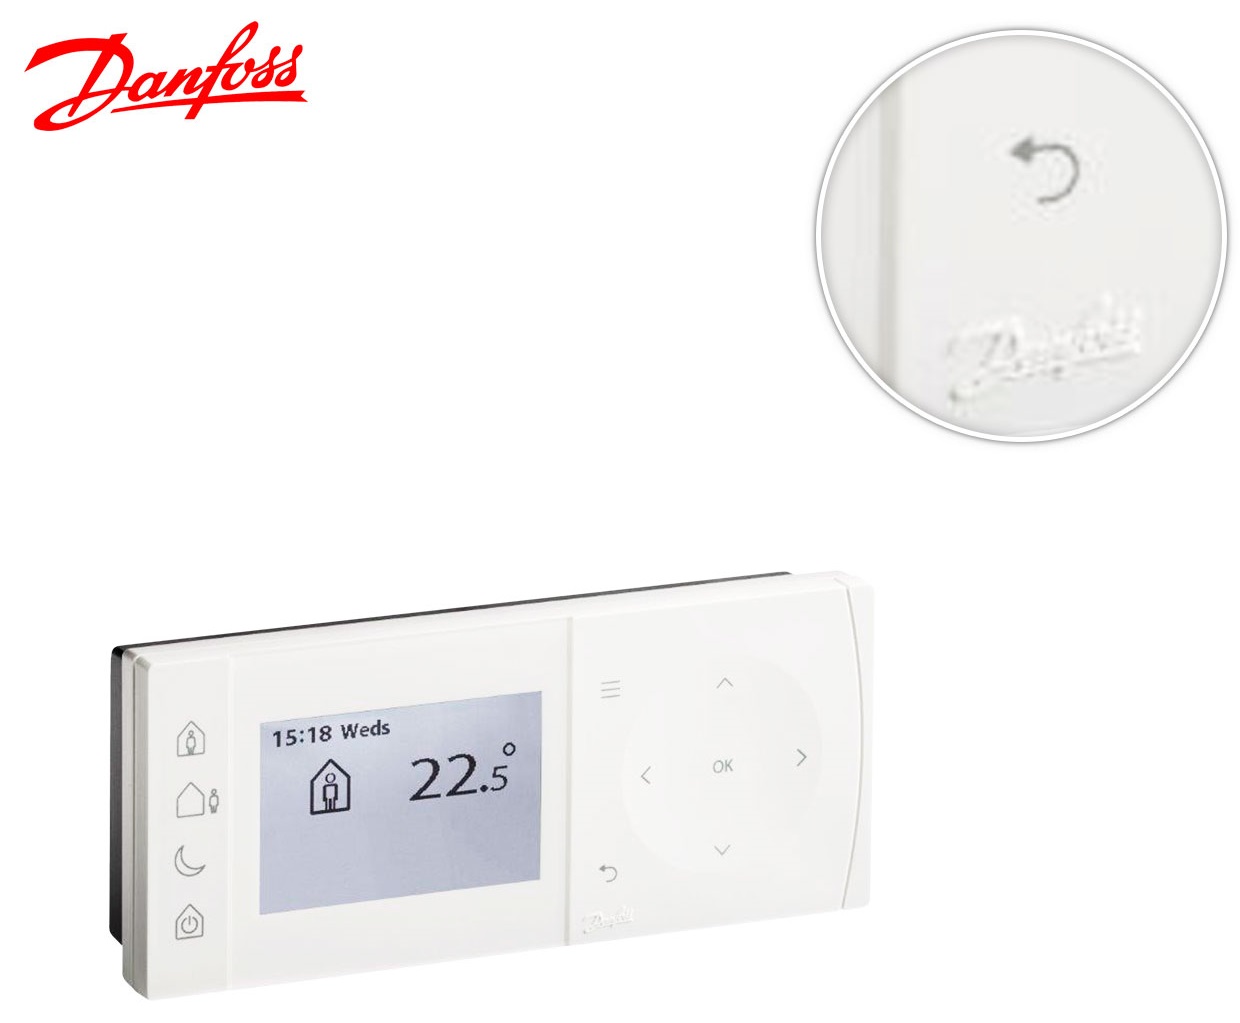 Digitāls telpas termostats TPOne-B-RF+RX1-S, programmējams, DANFOSS, 087N7854